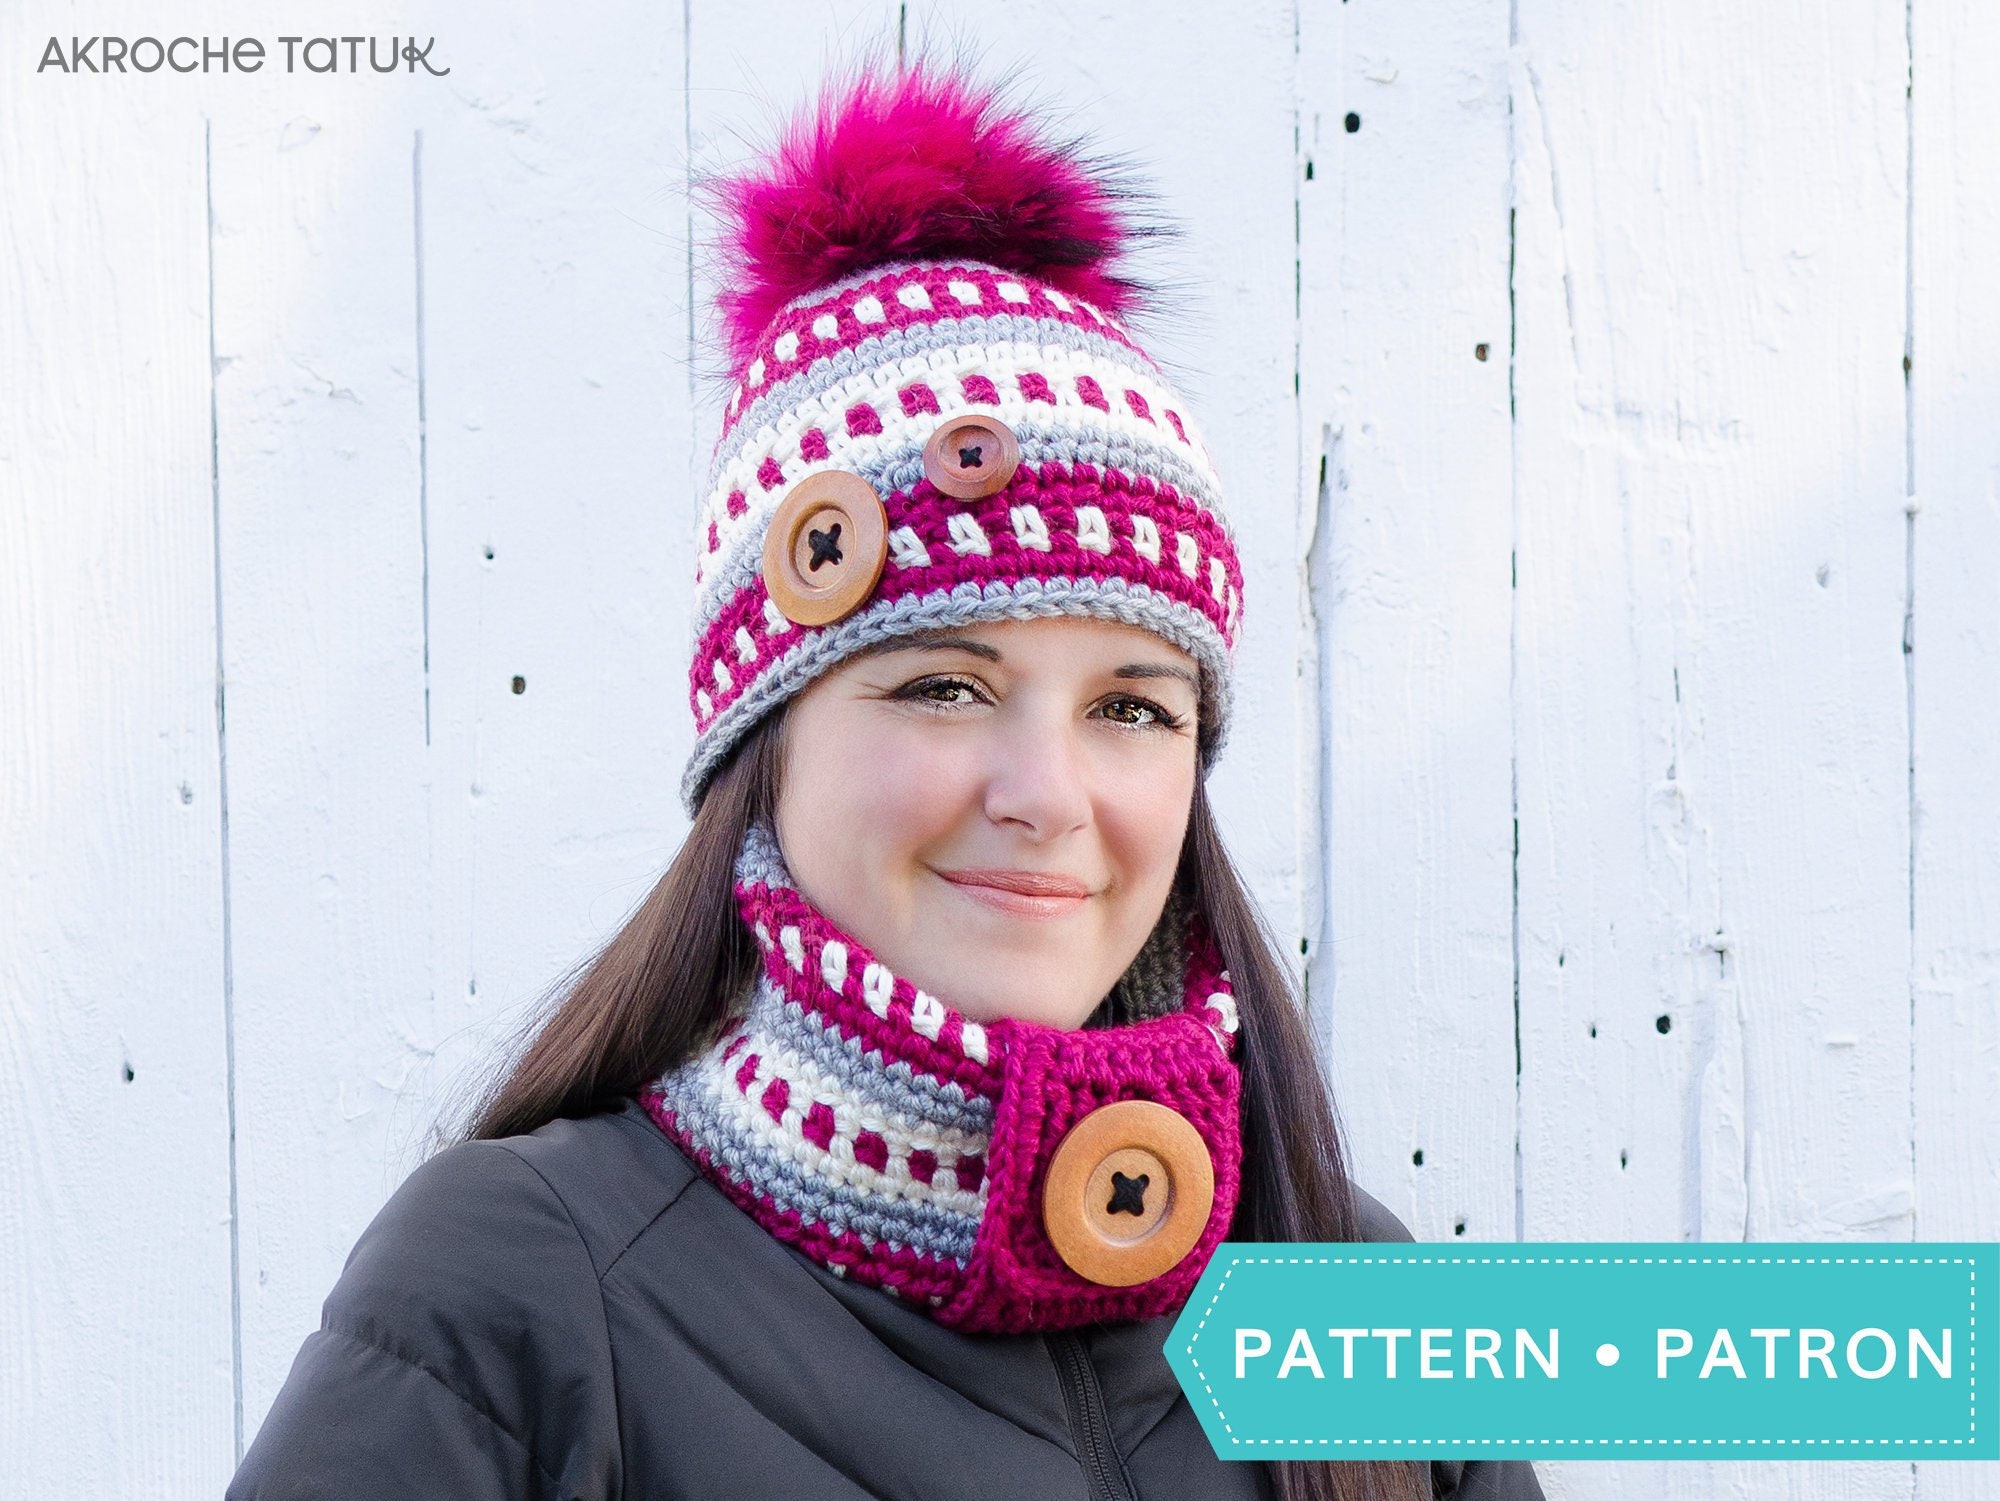 3 buttons for Akroche Tatuk pattern